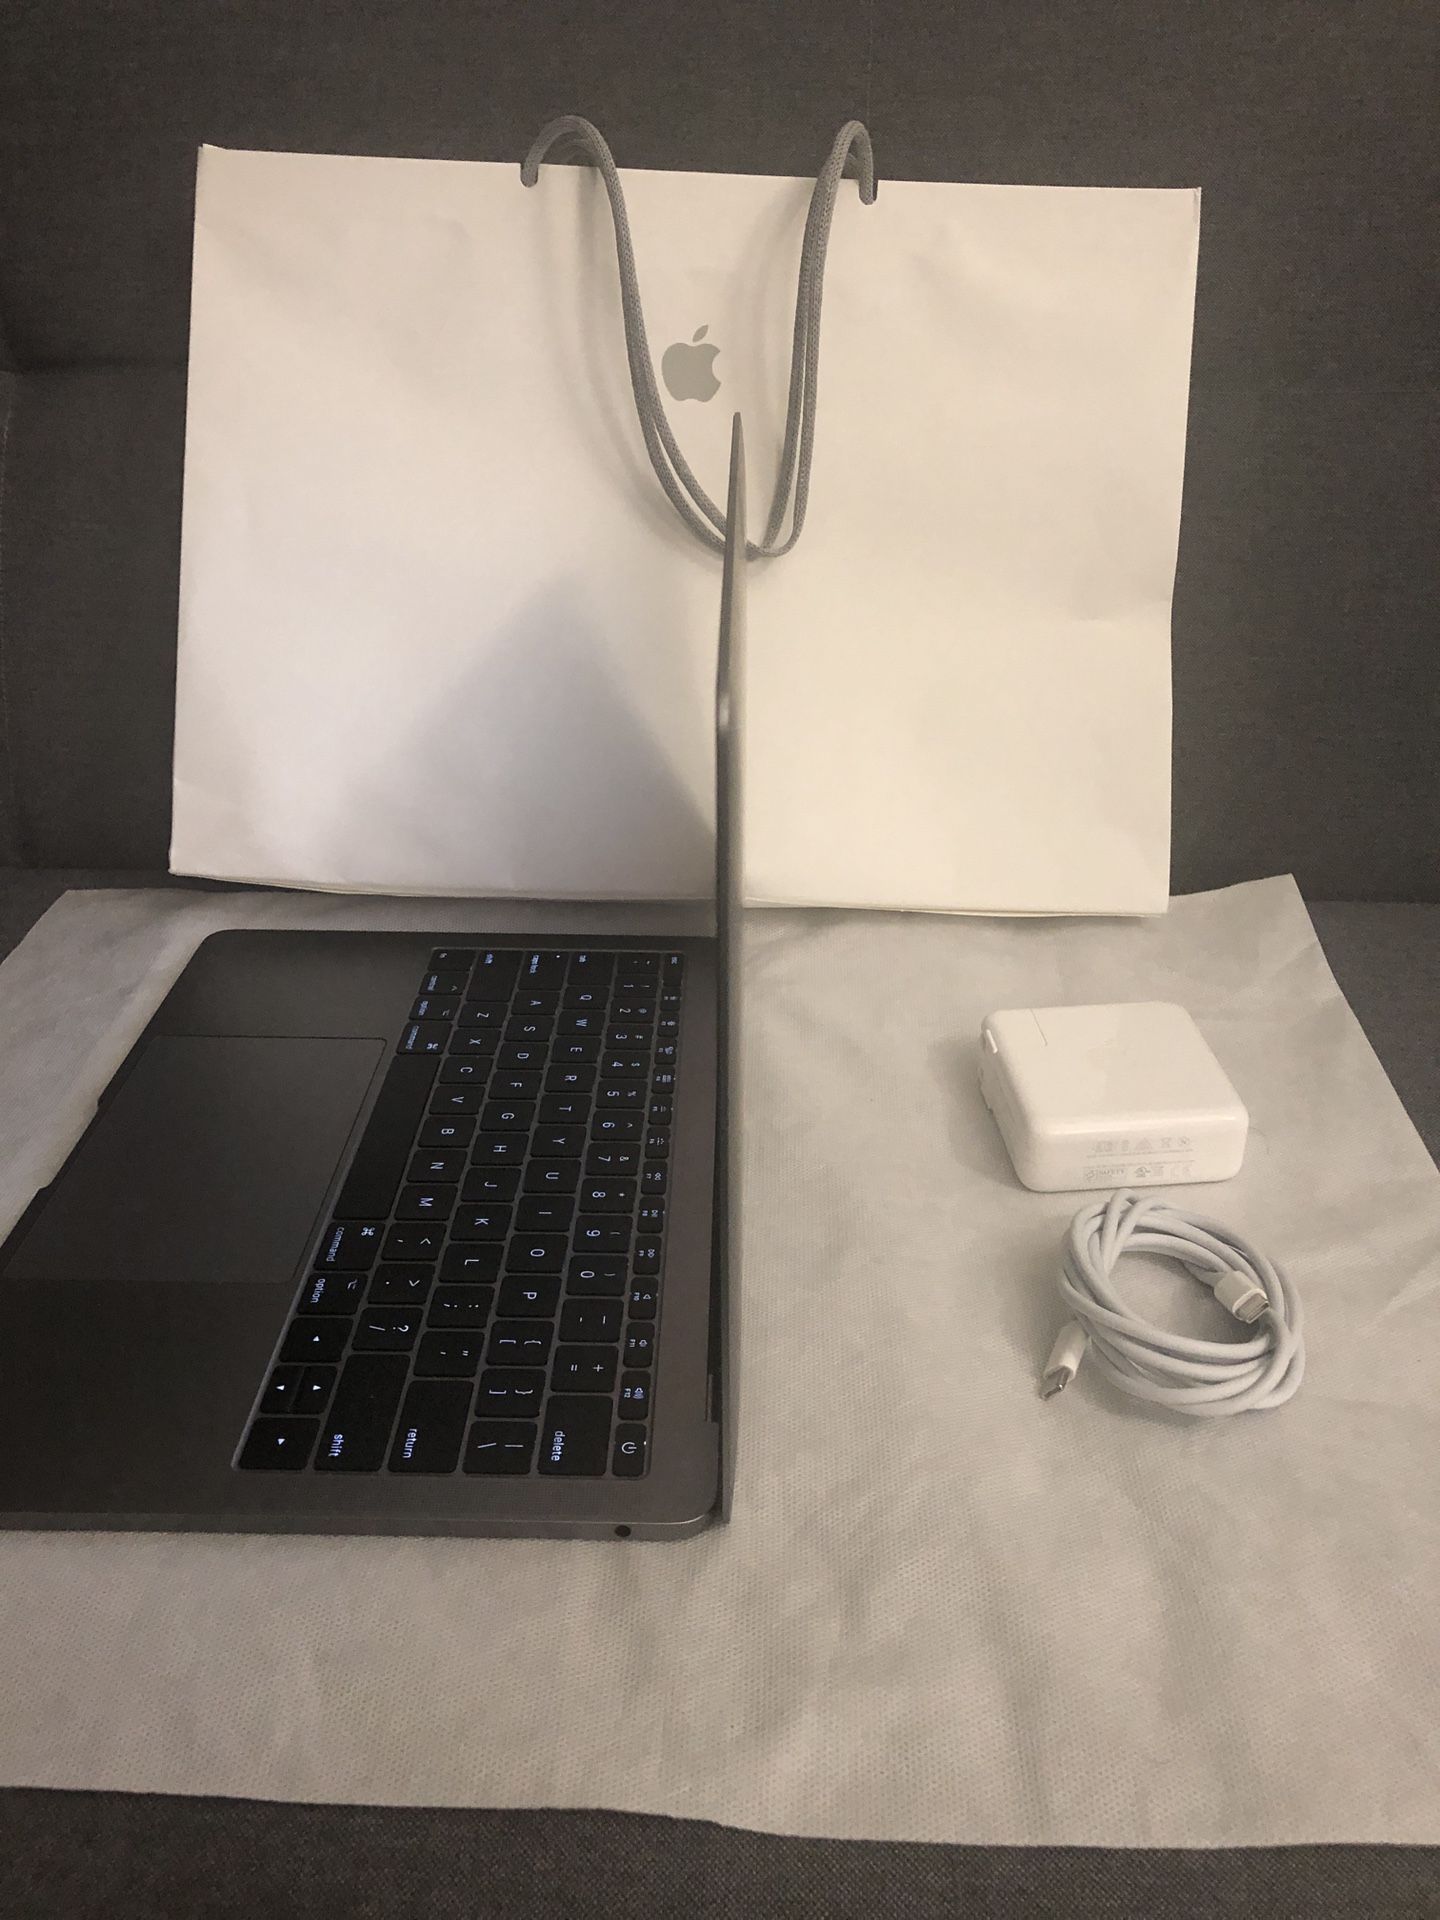 MacBook Pro 13 - inch 2017 two thunderbolt 3 ports Apple Laptop